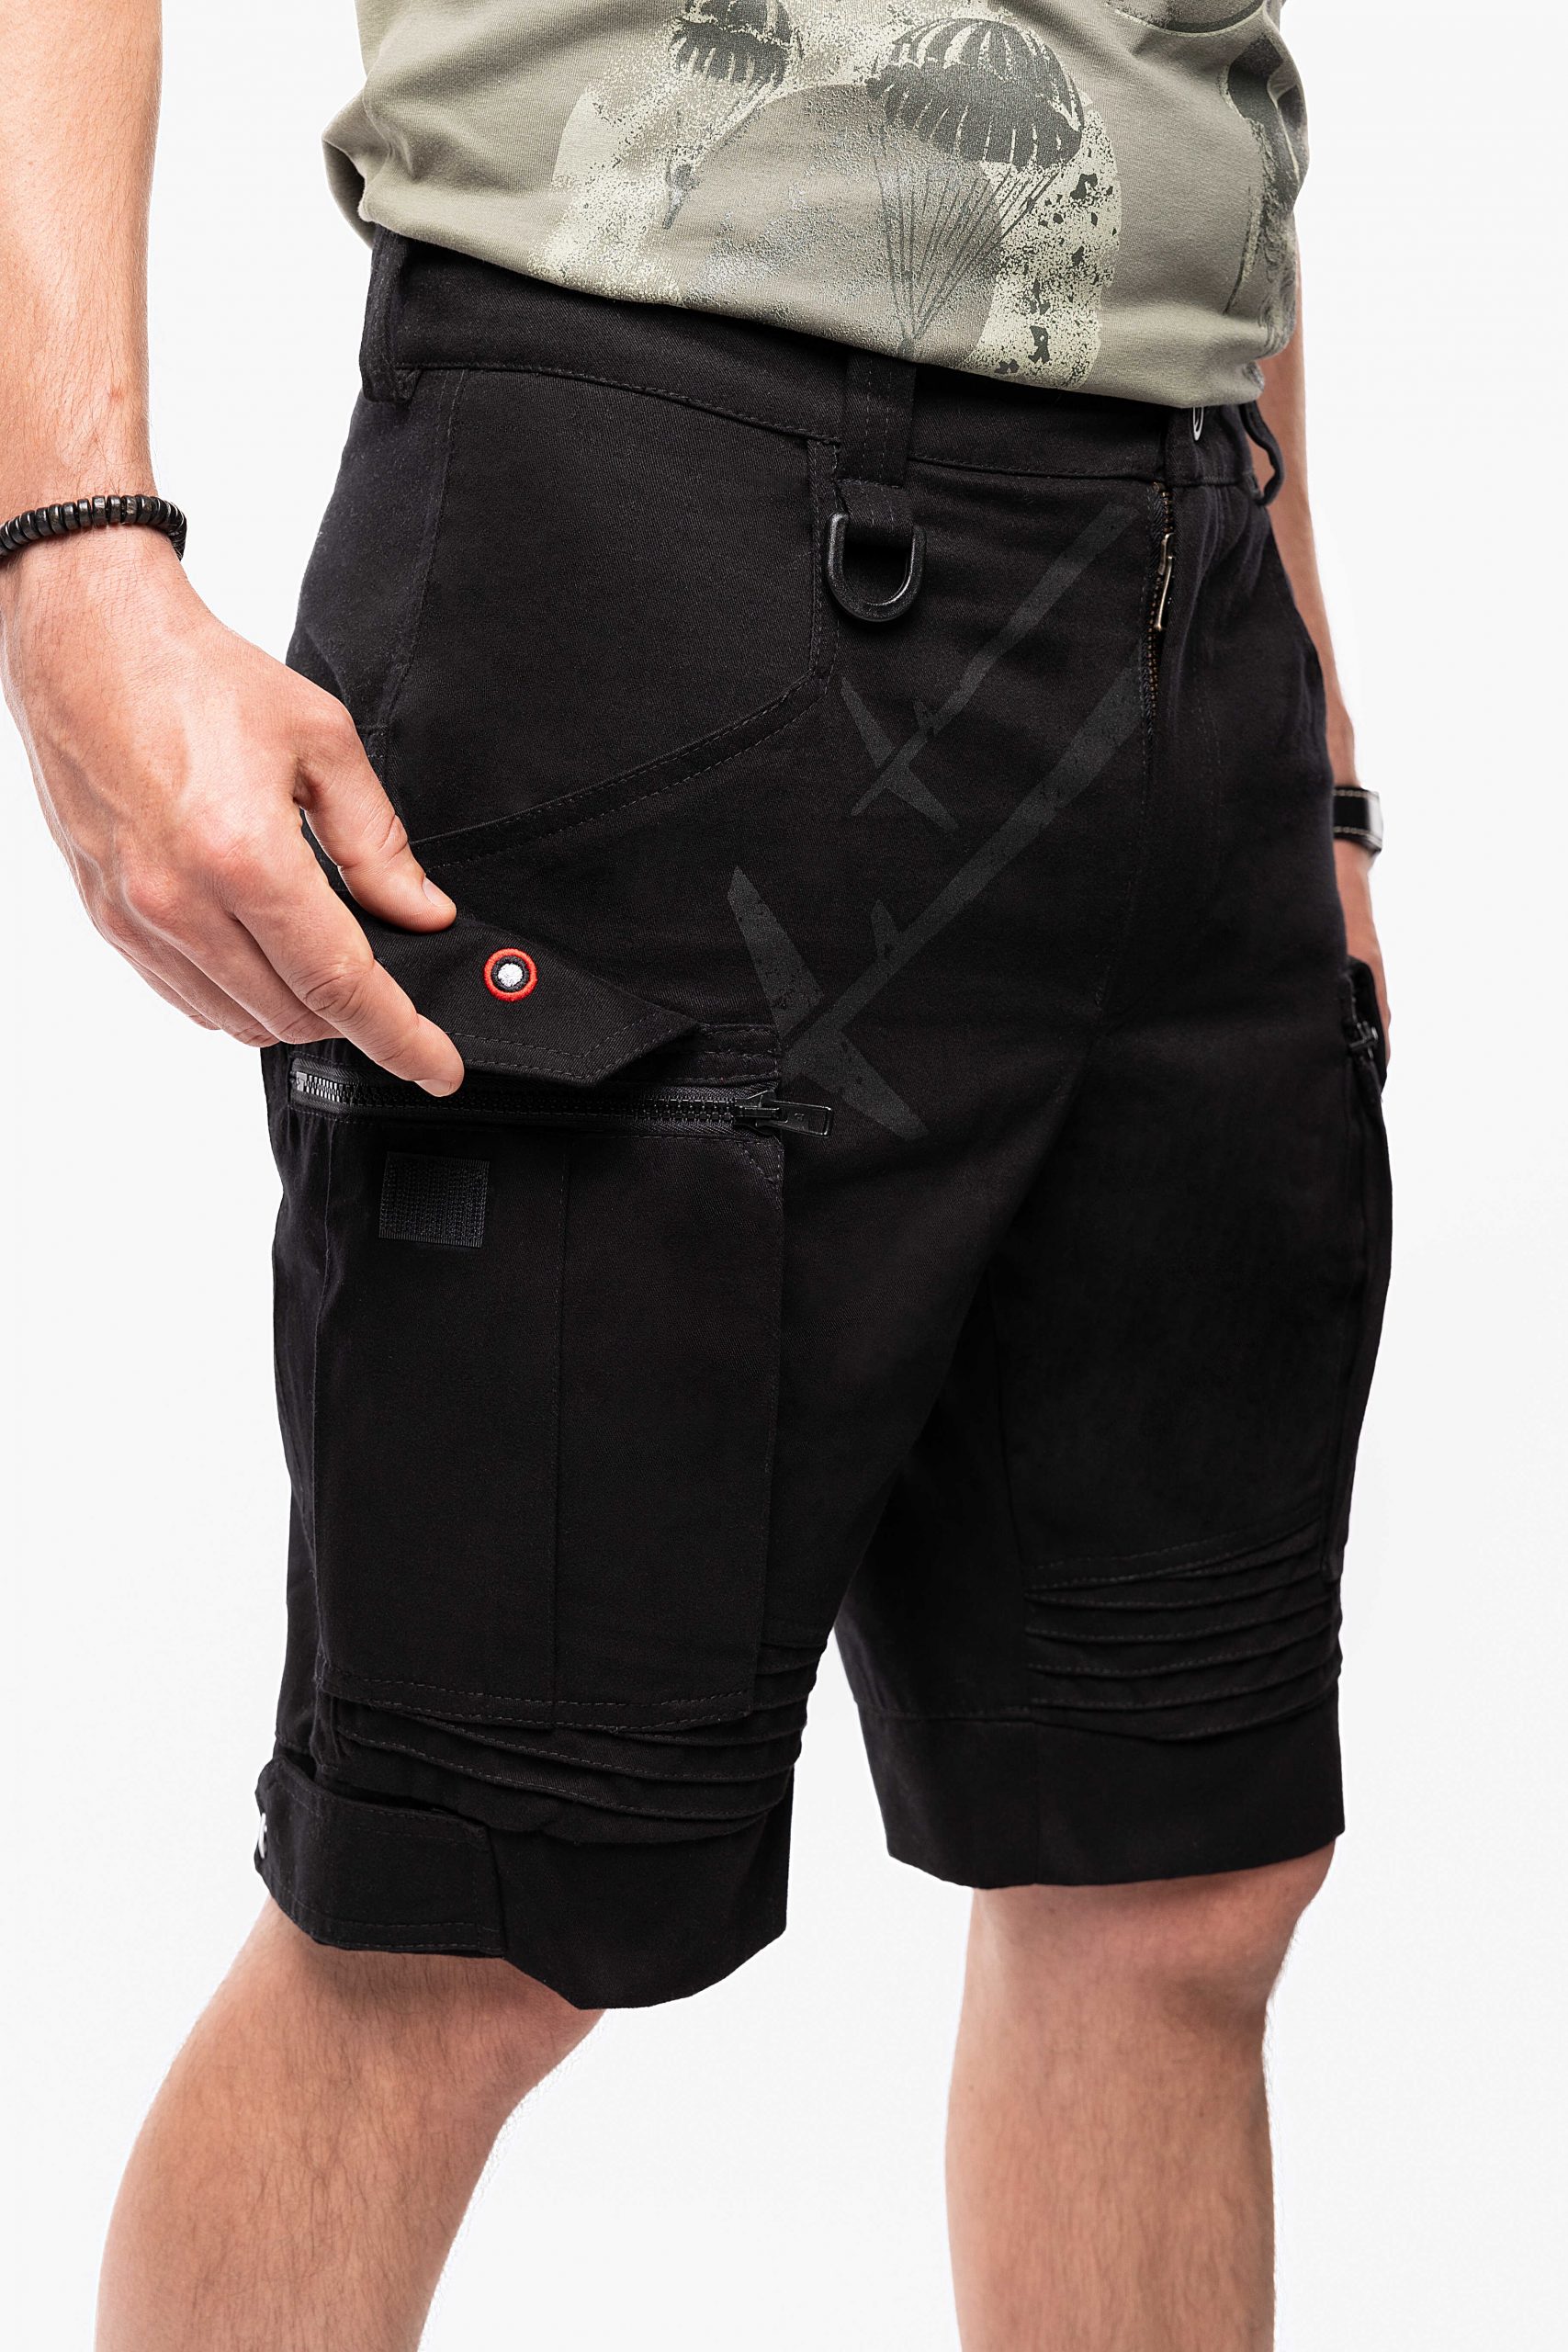 Men's Shorts Flyer. Color black. 4.